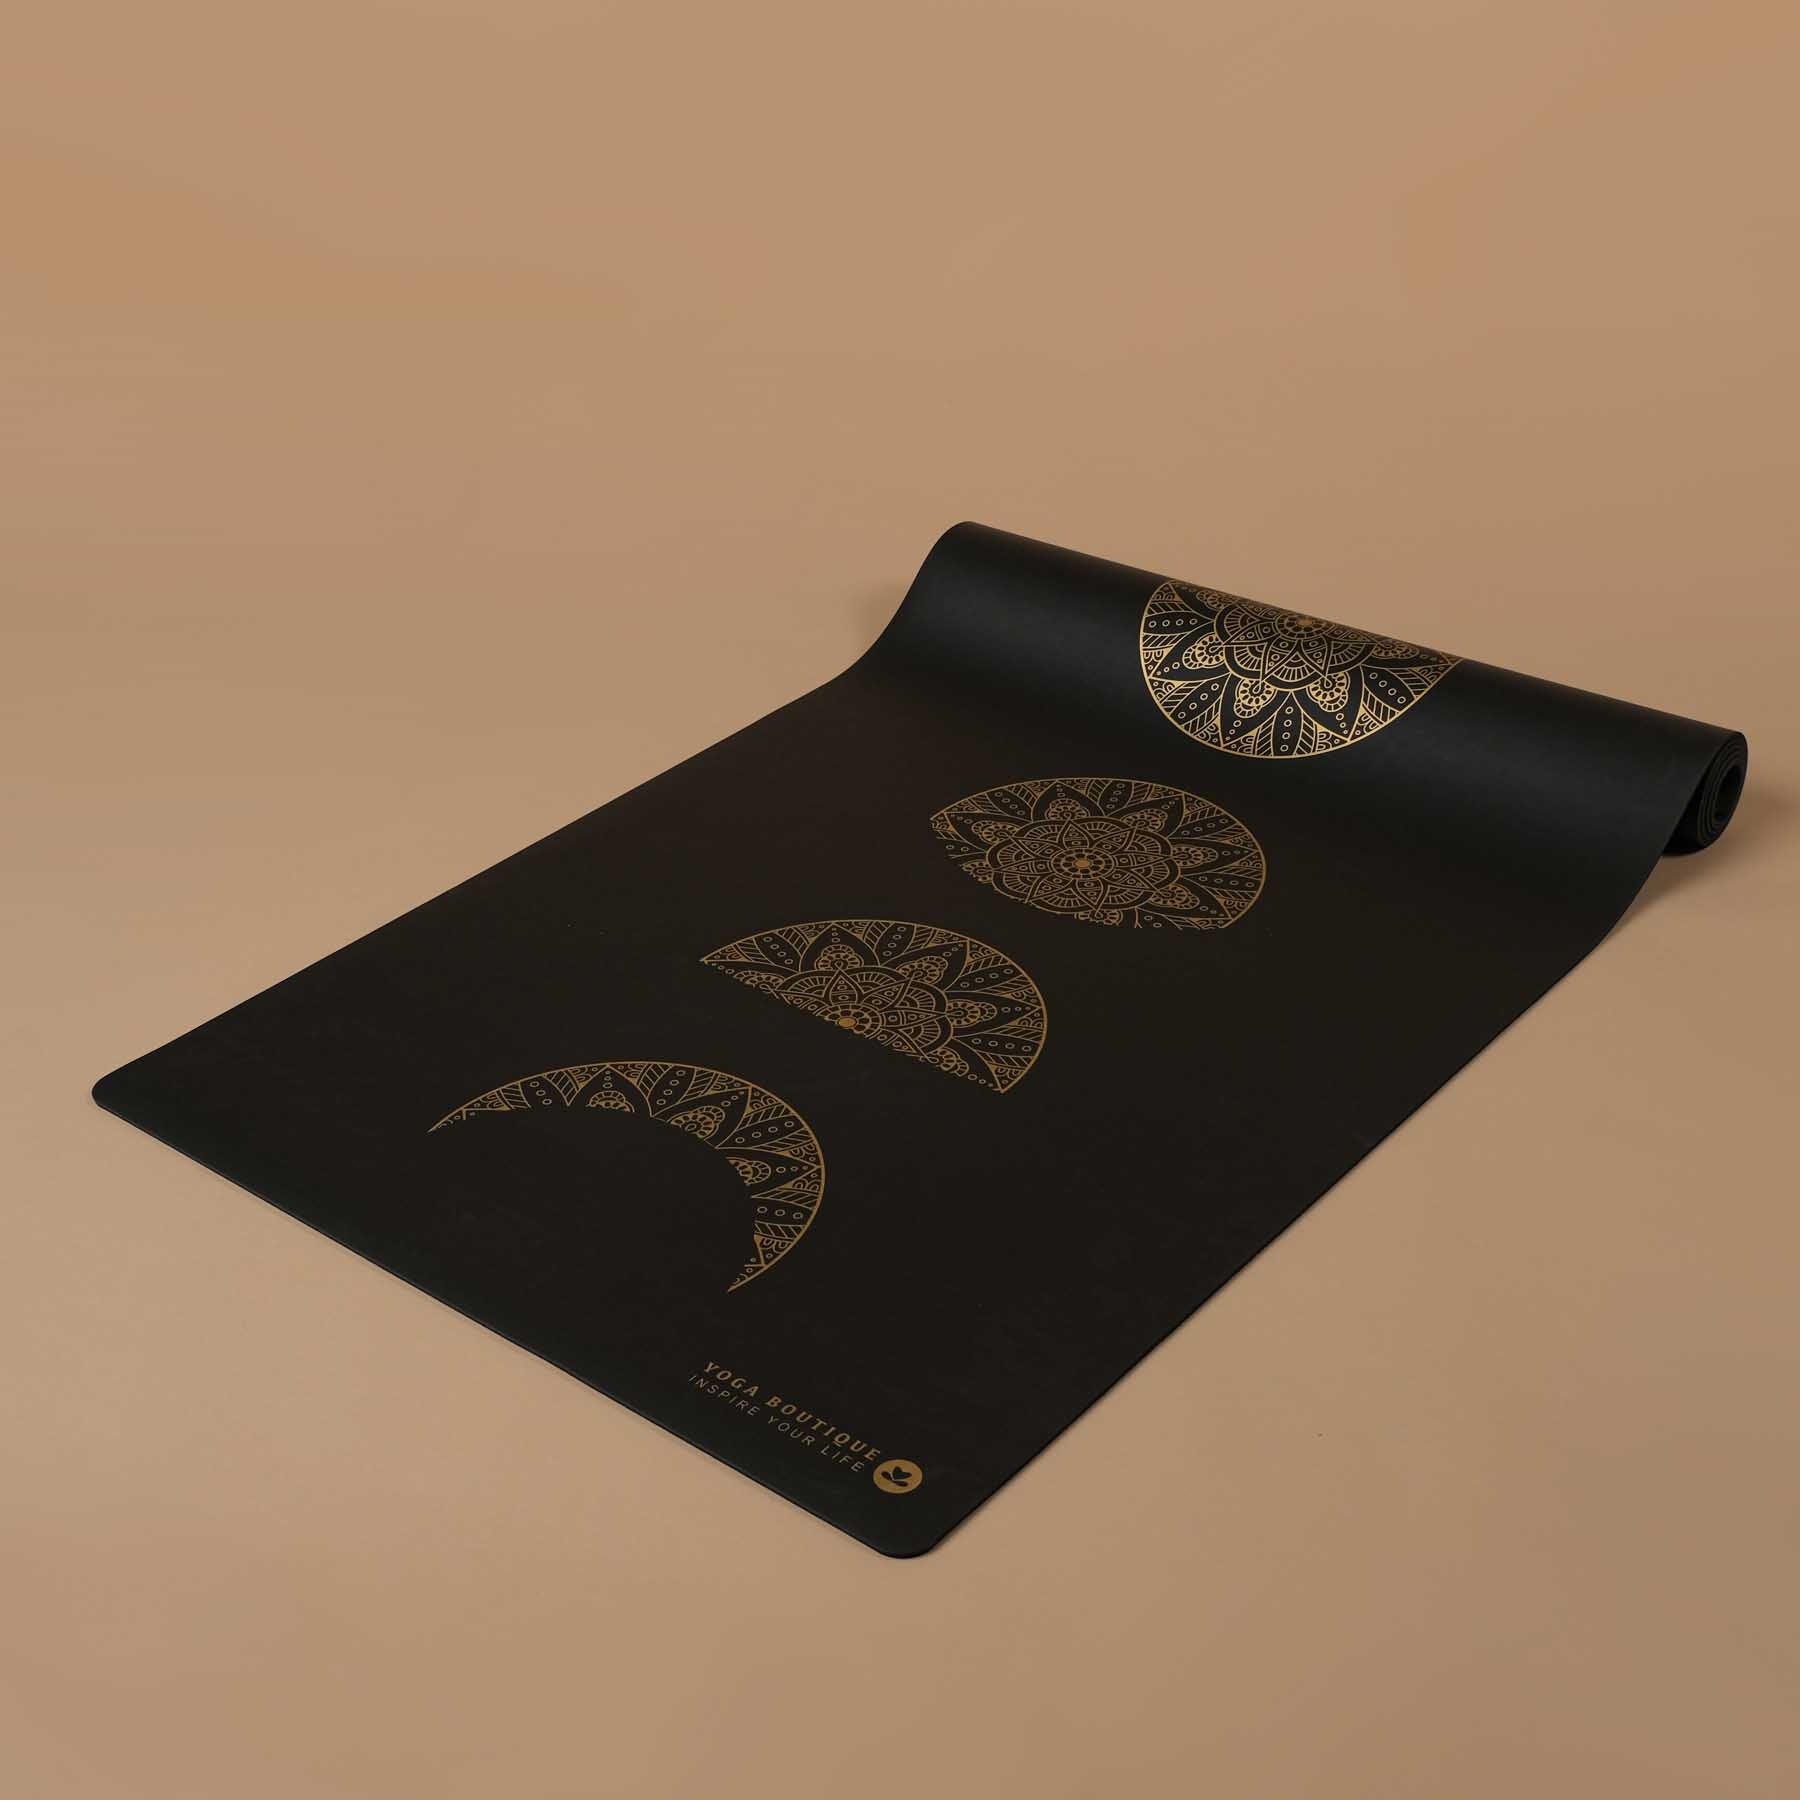 Tapis de yoga SuperGrip 2.0 Mandala Moon super antidérapant en caoutchouc naturel noir